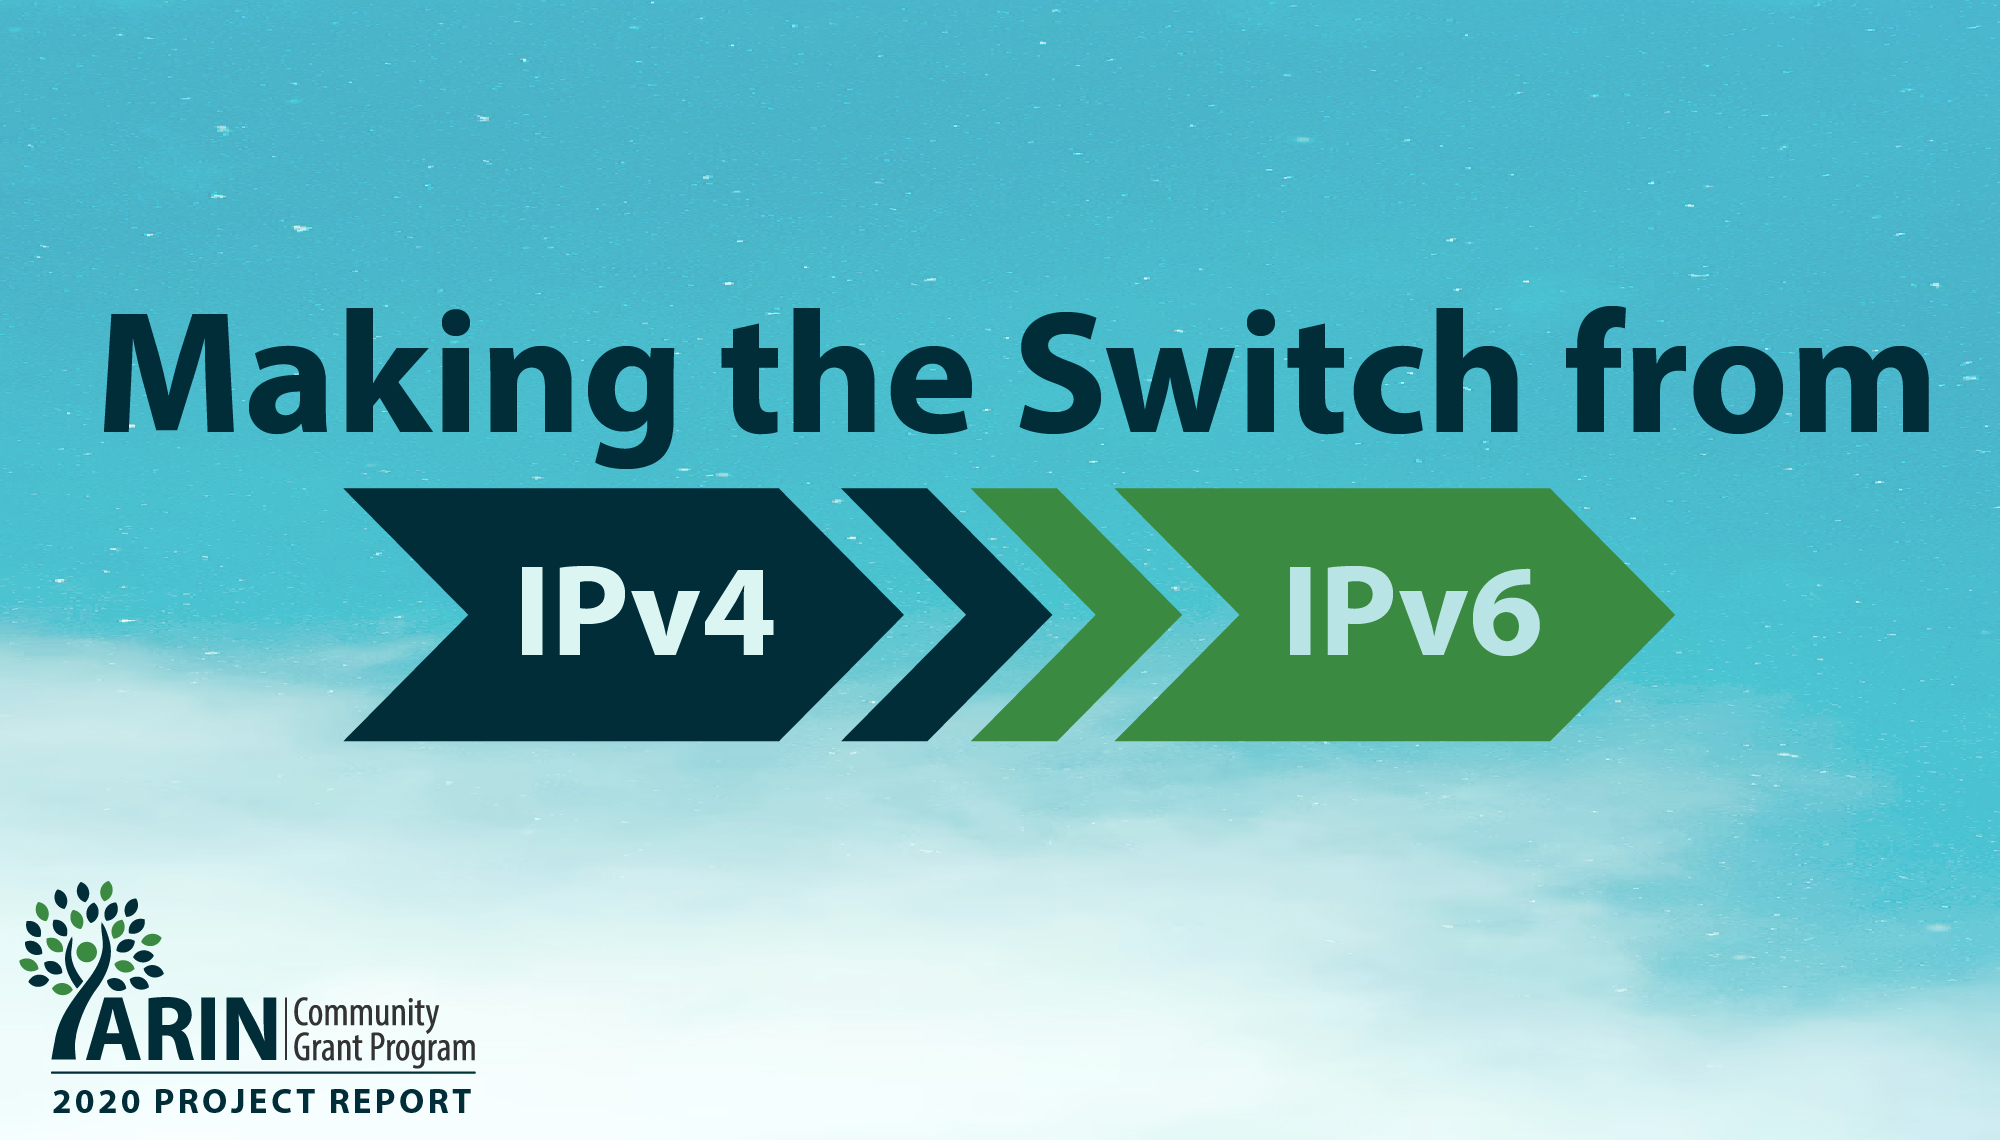 Enterprise IPv4 to IPv6: Making the Switch